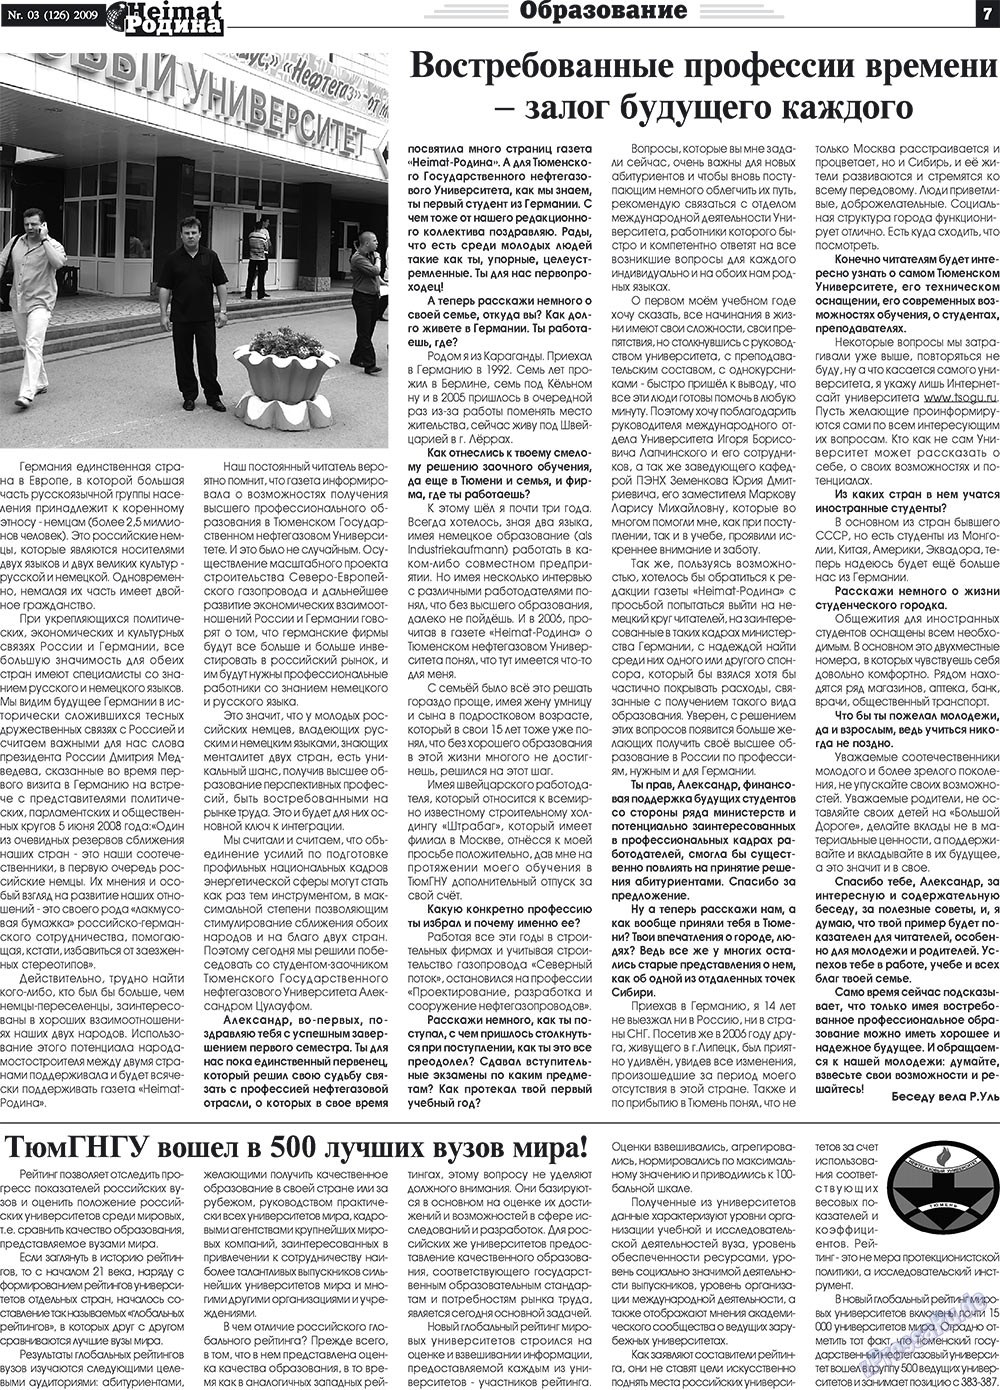 Heimat-Родина, газета. 2009 №3 стр.7